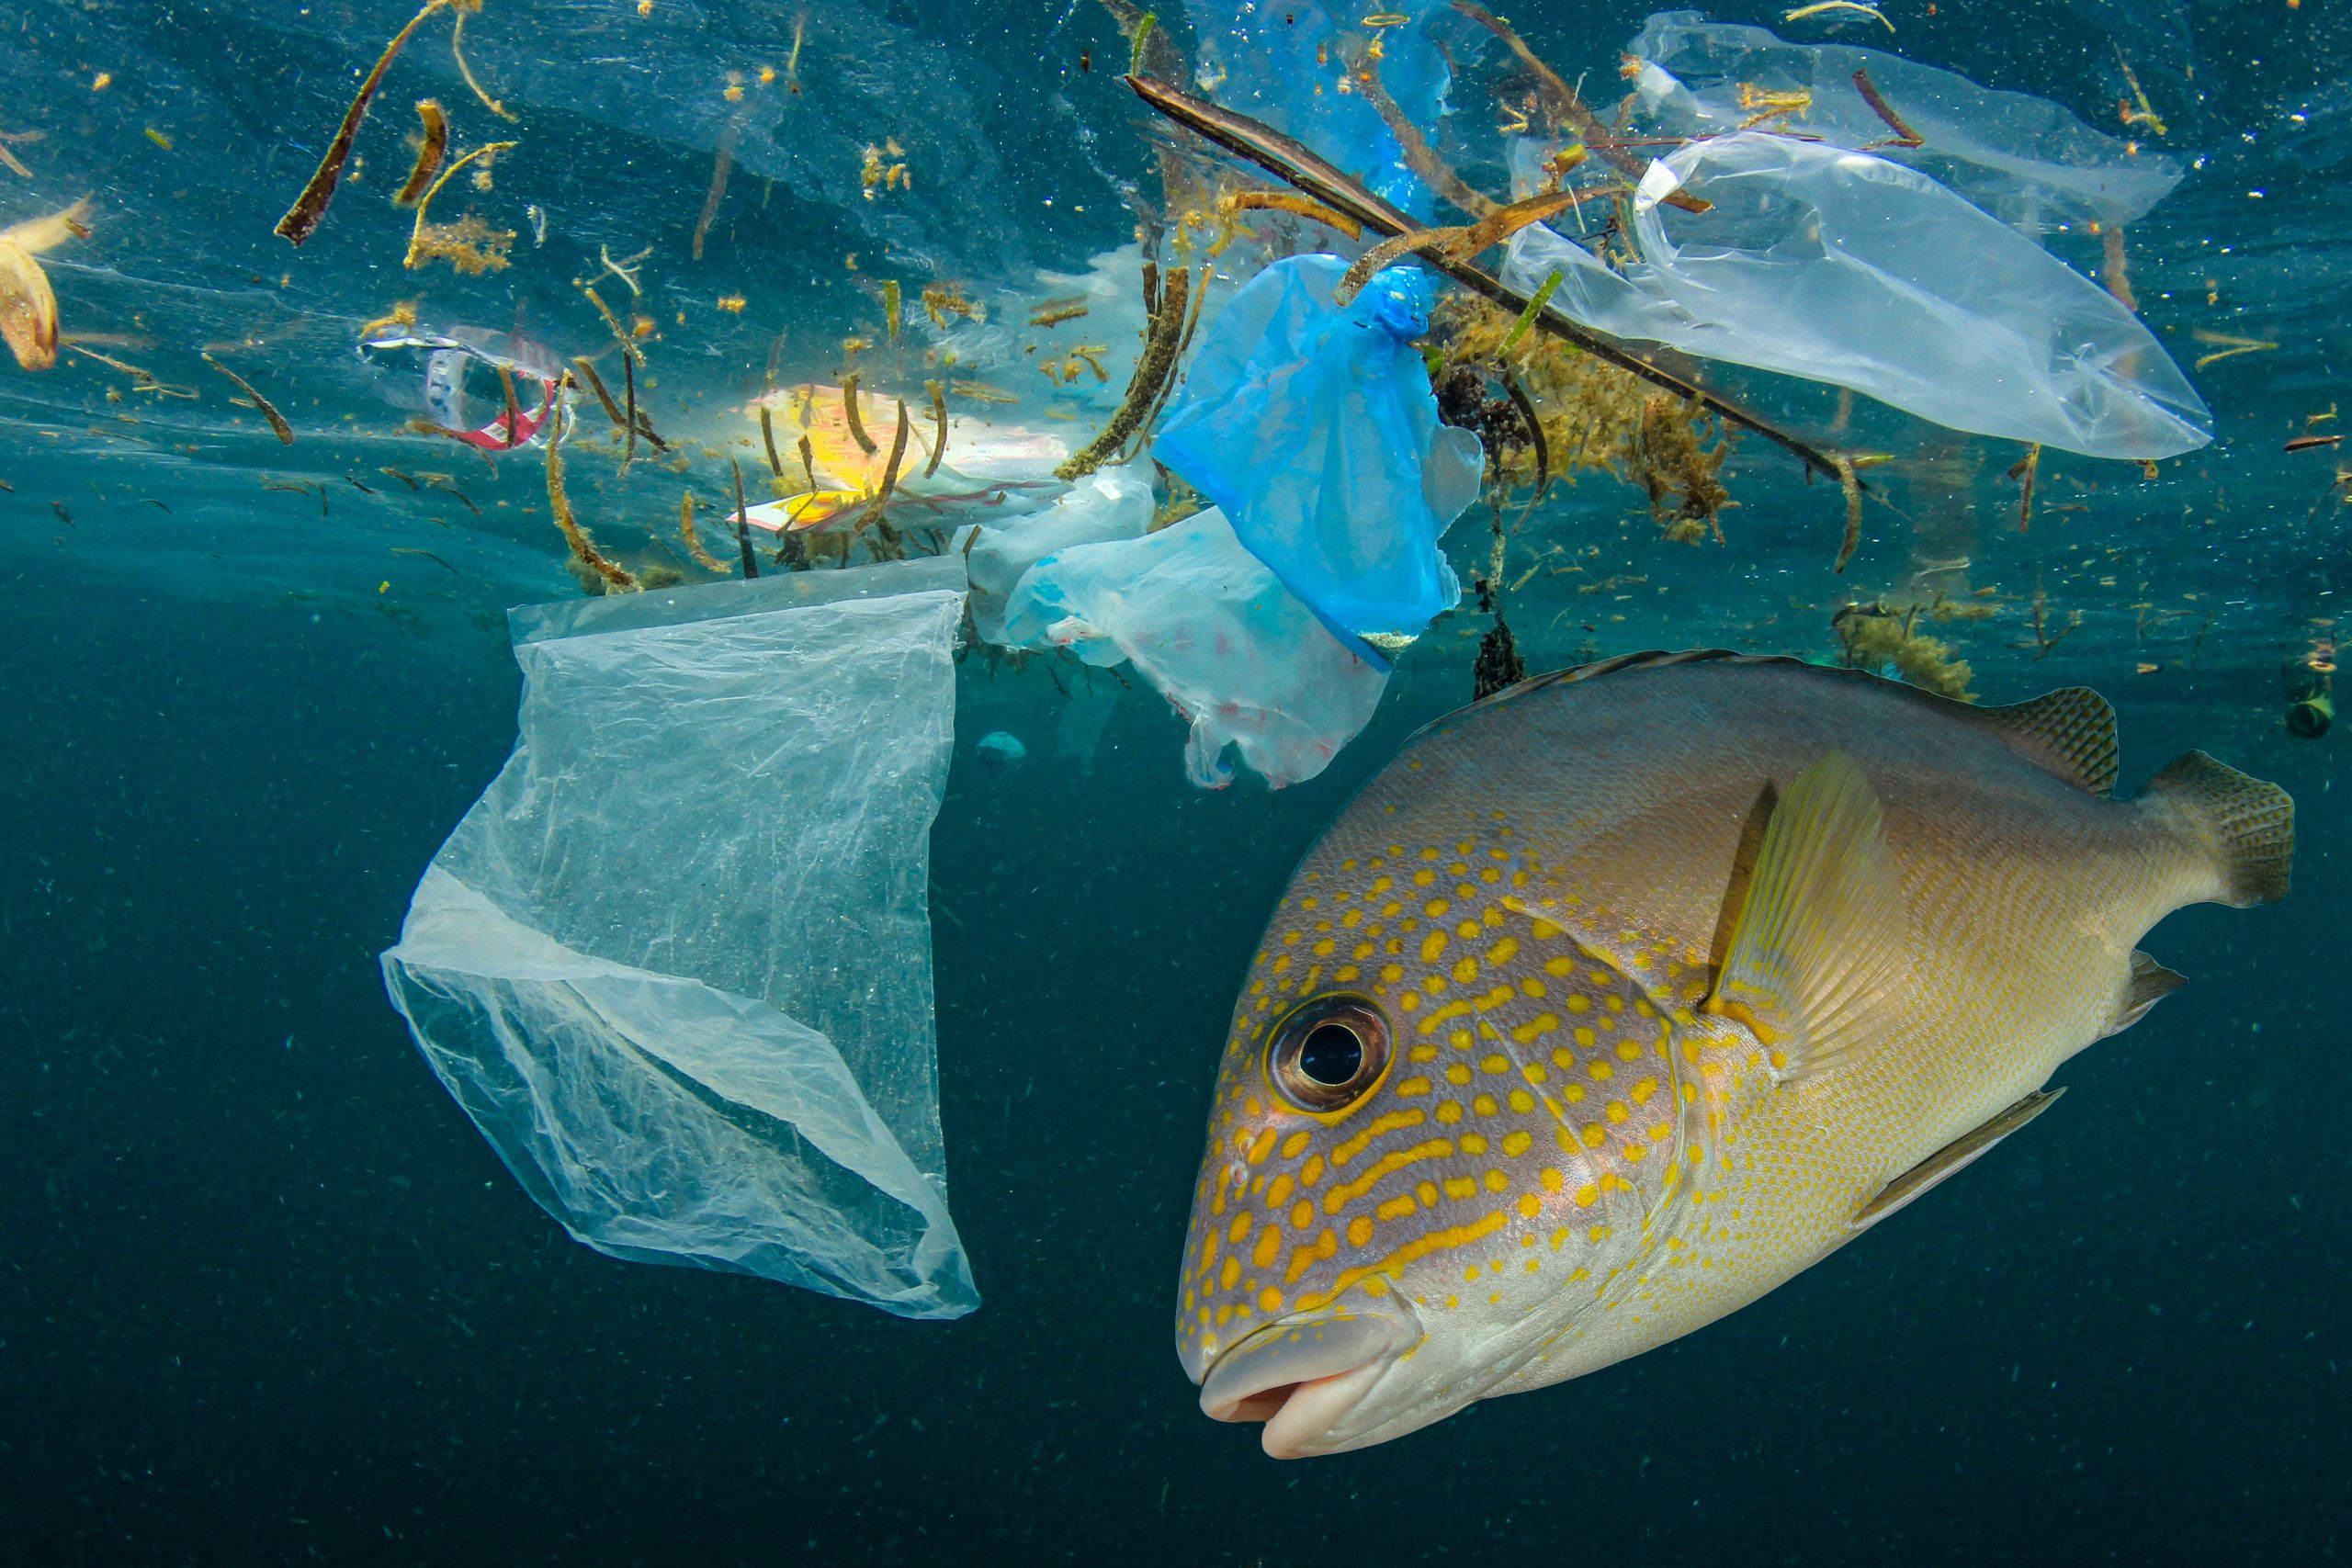 Tonnes of plastic in the ocean